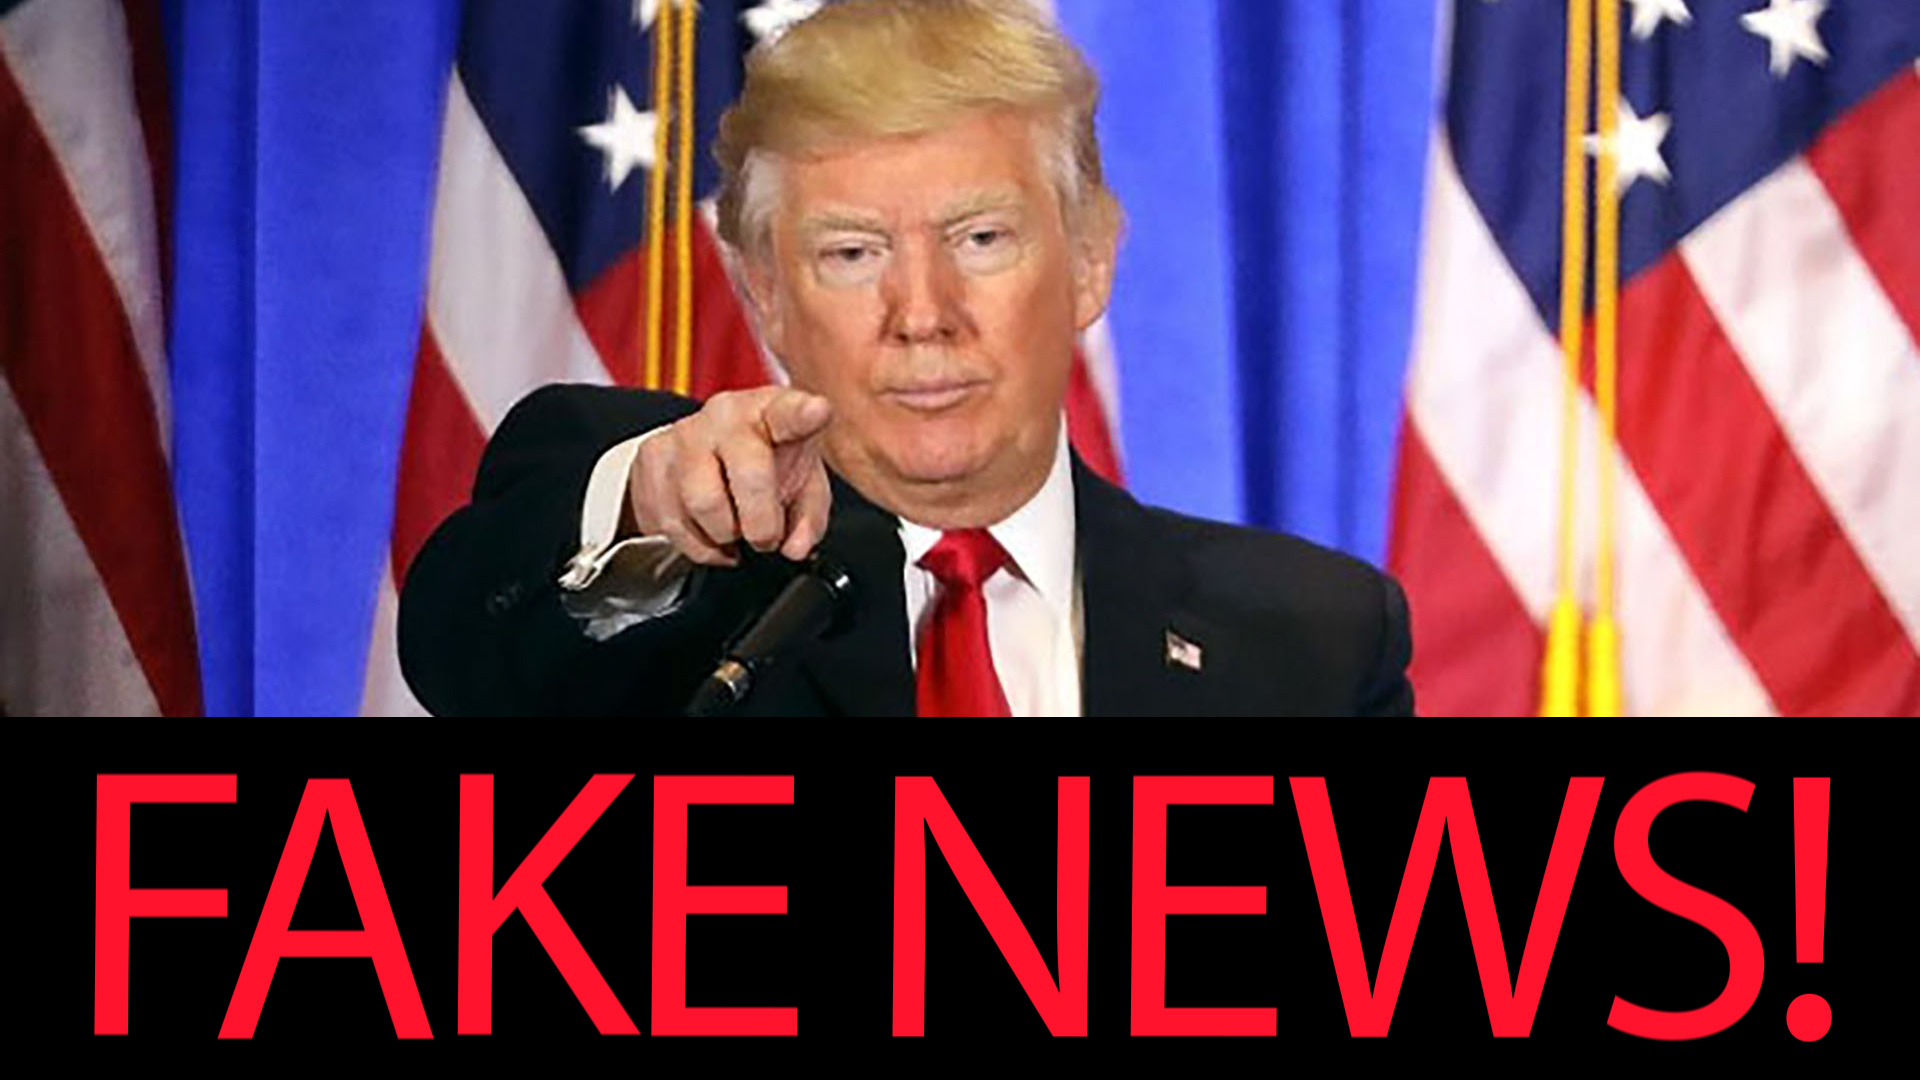 Donald Trump_FakeNews